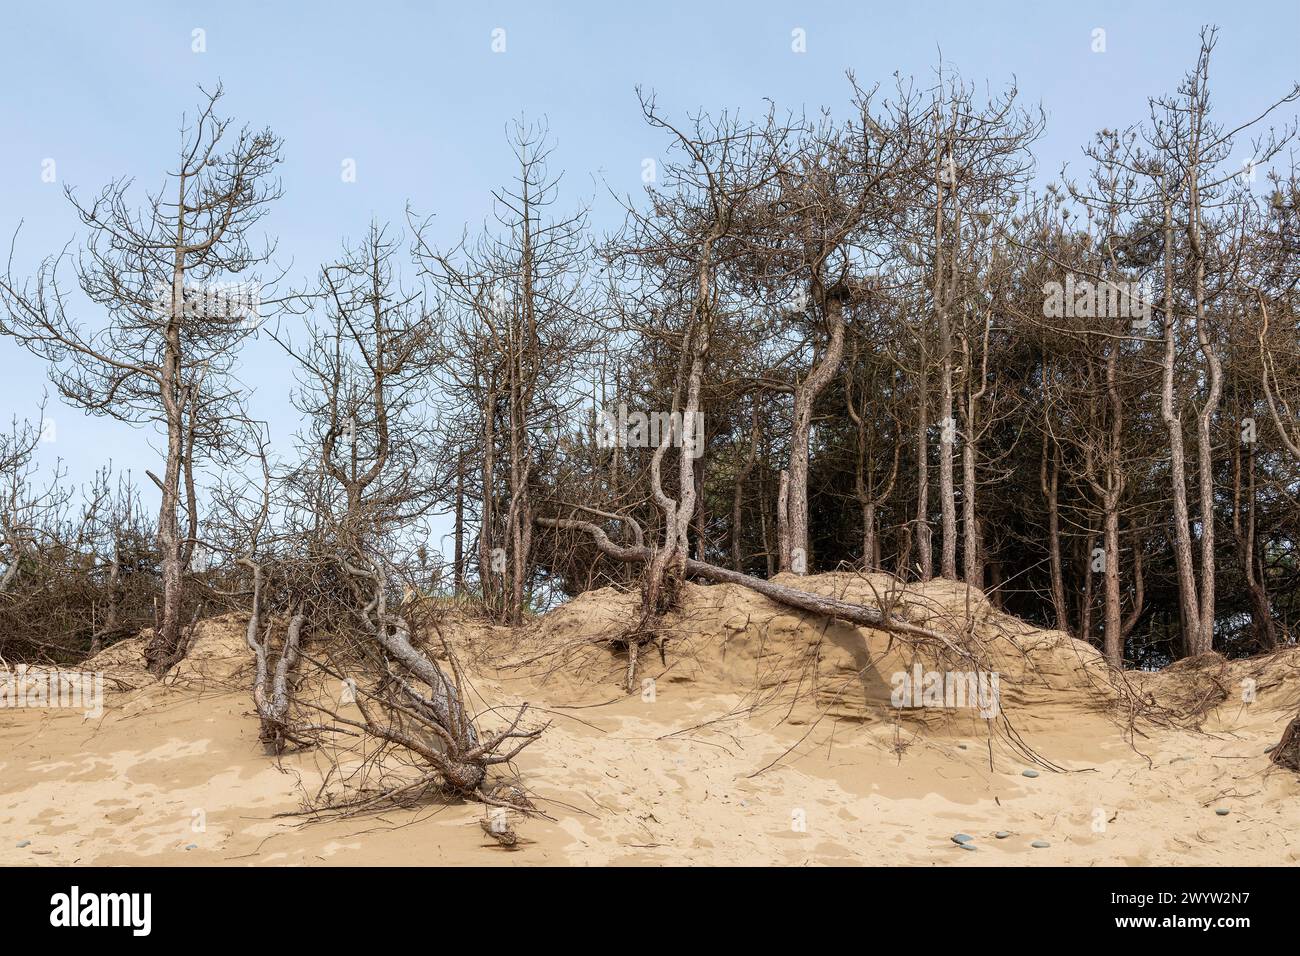 Dead Trees, LLanddwyn Bay, Newborough, Anglesey Island, pays de Galles, grande-Bretagne Banque D'Images